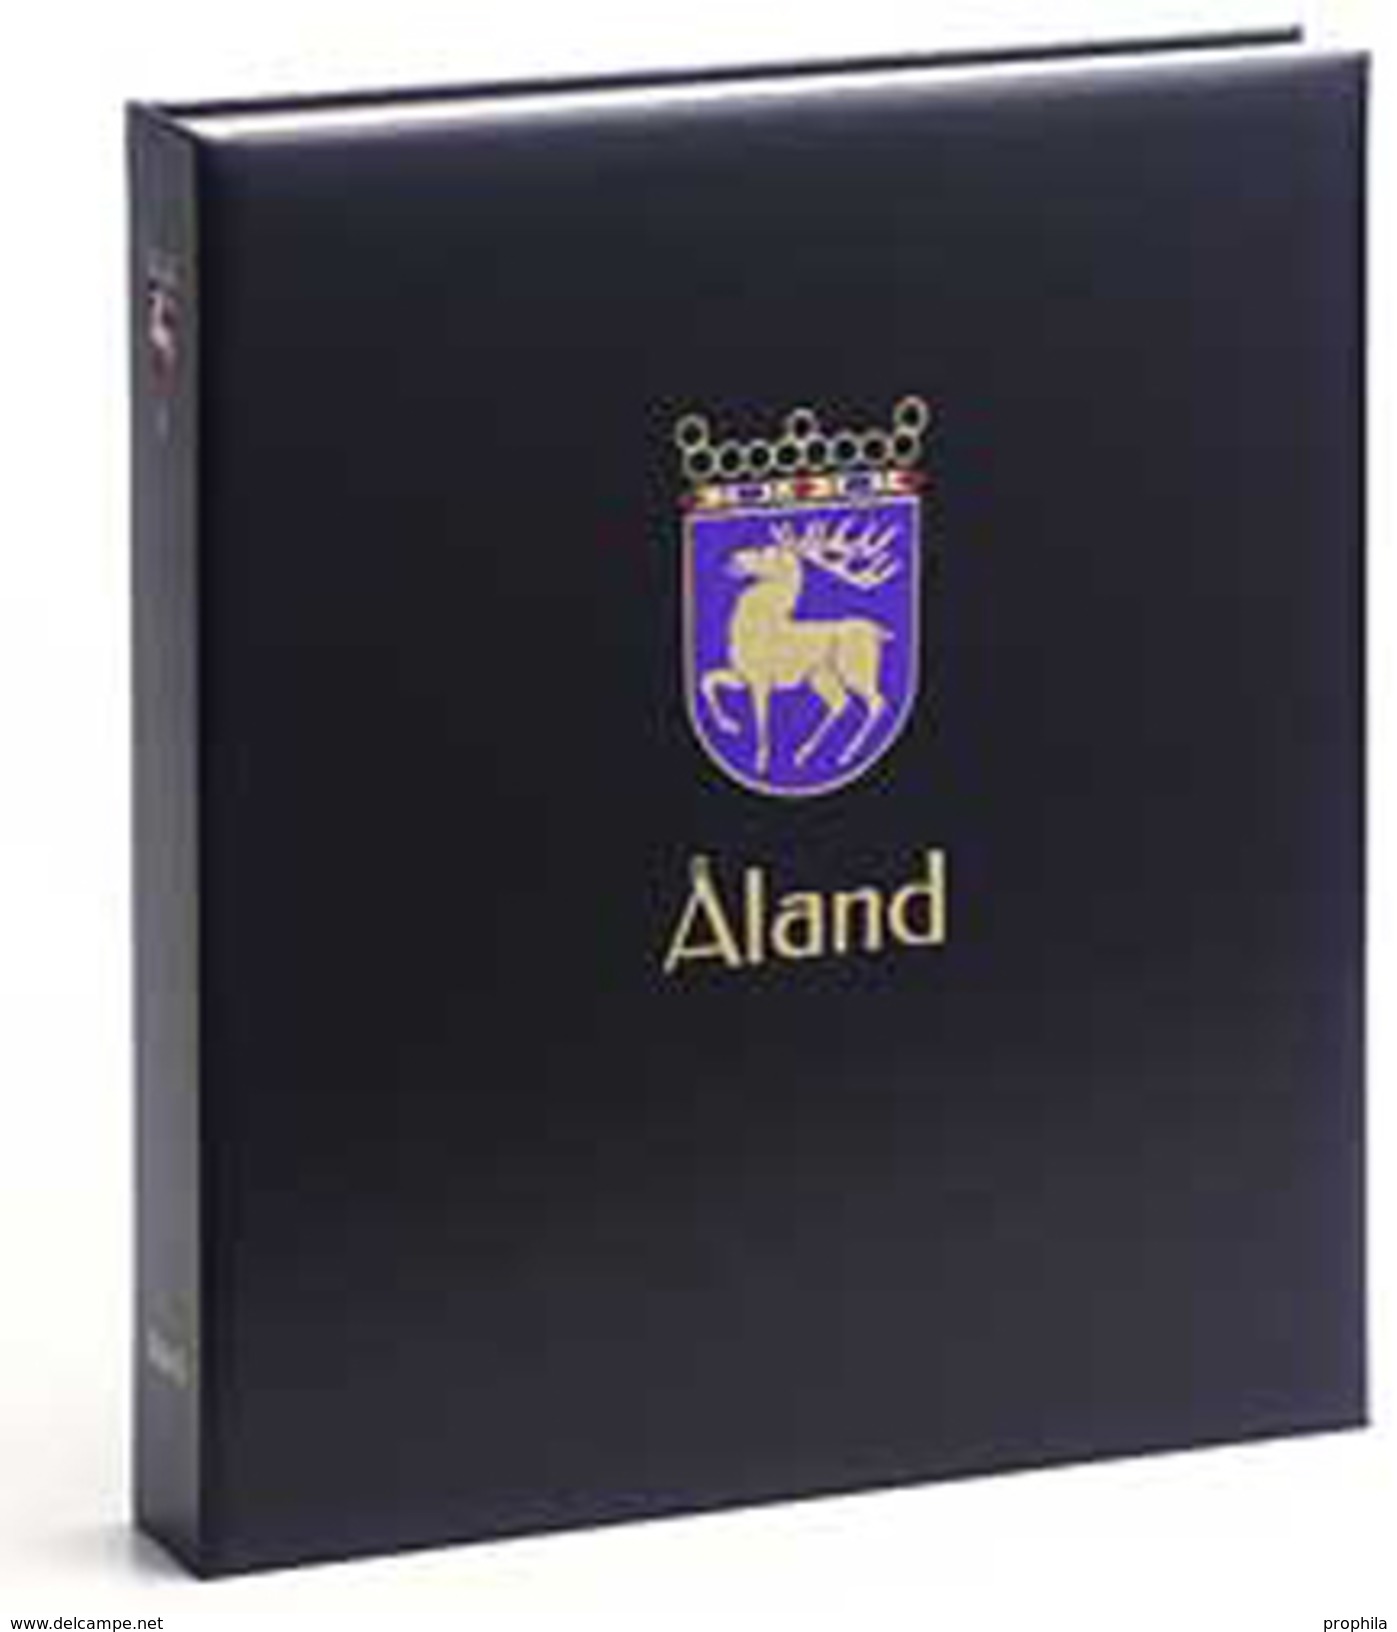 DAVO 1341 Luxus Binder Briefmarkenalbum Aland I - Large Format, Black Pages